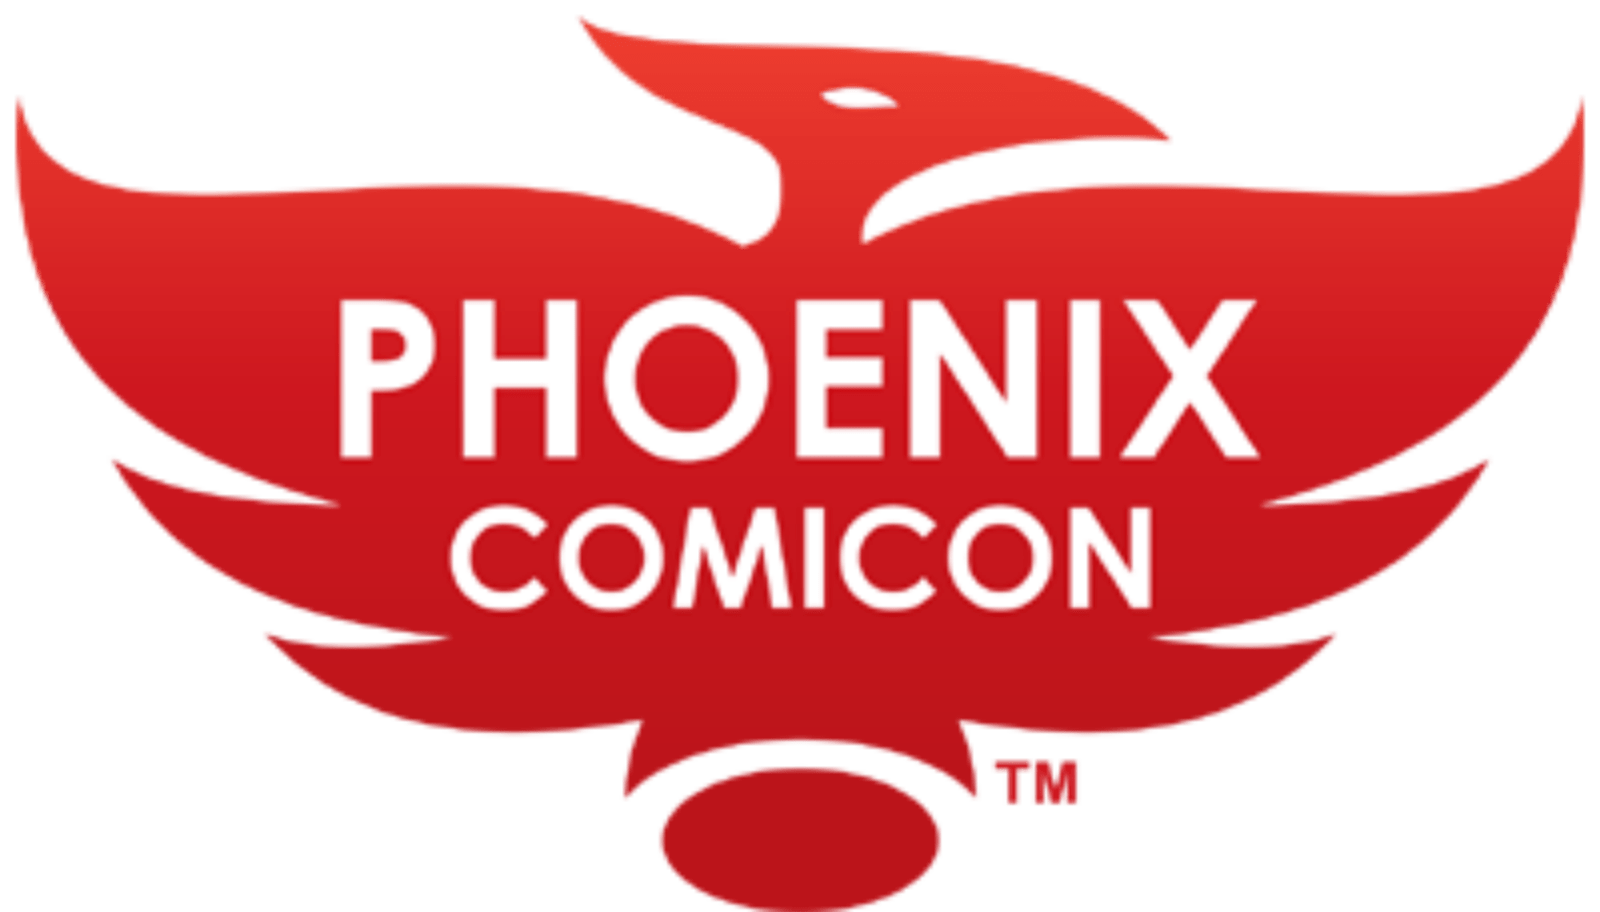 Phoenix Comicon 2017